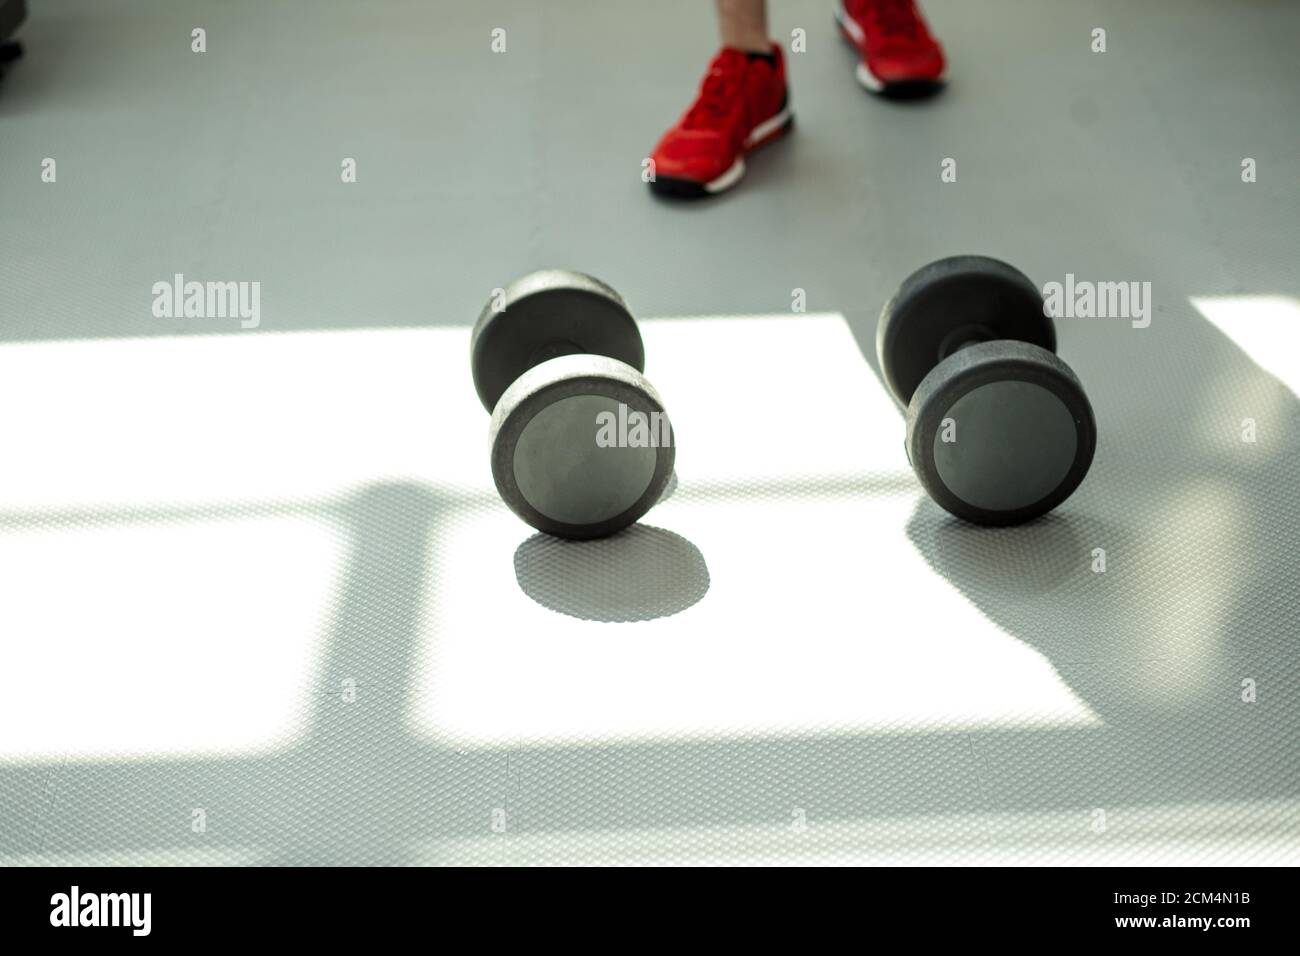 Photo of sport equipment in gym. Dumbbells on floor. Stock Photo